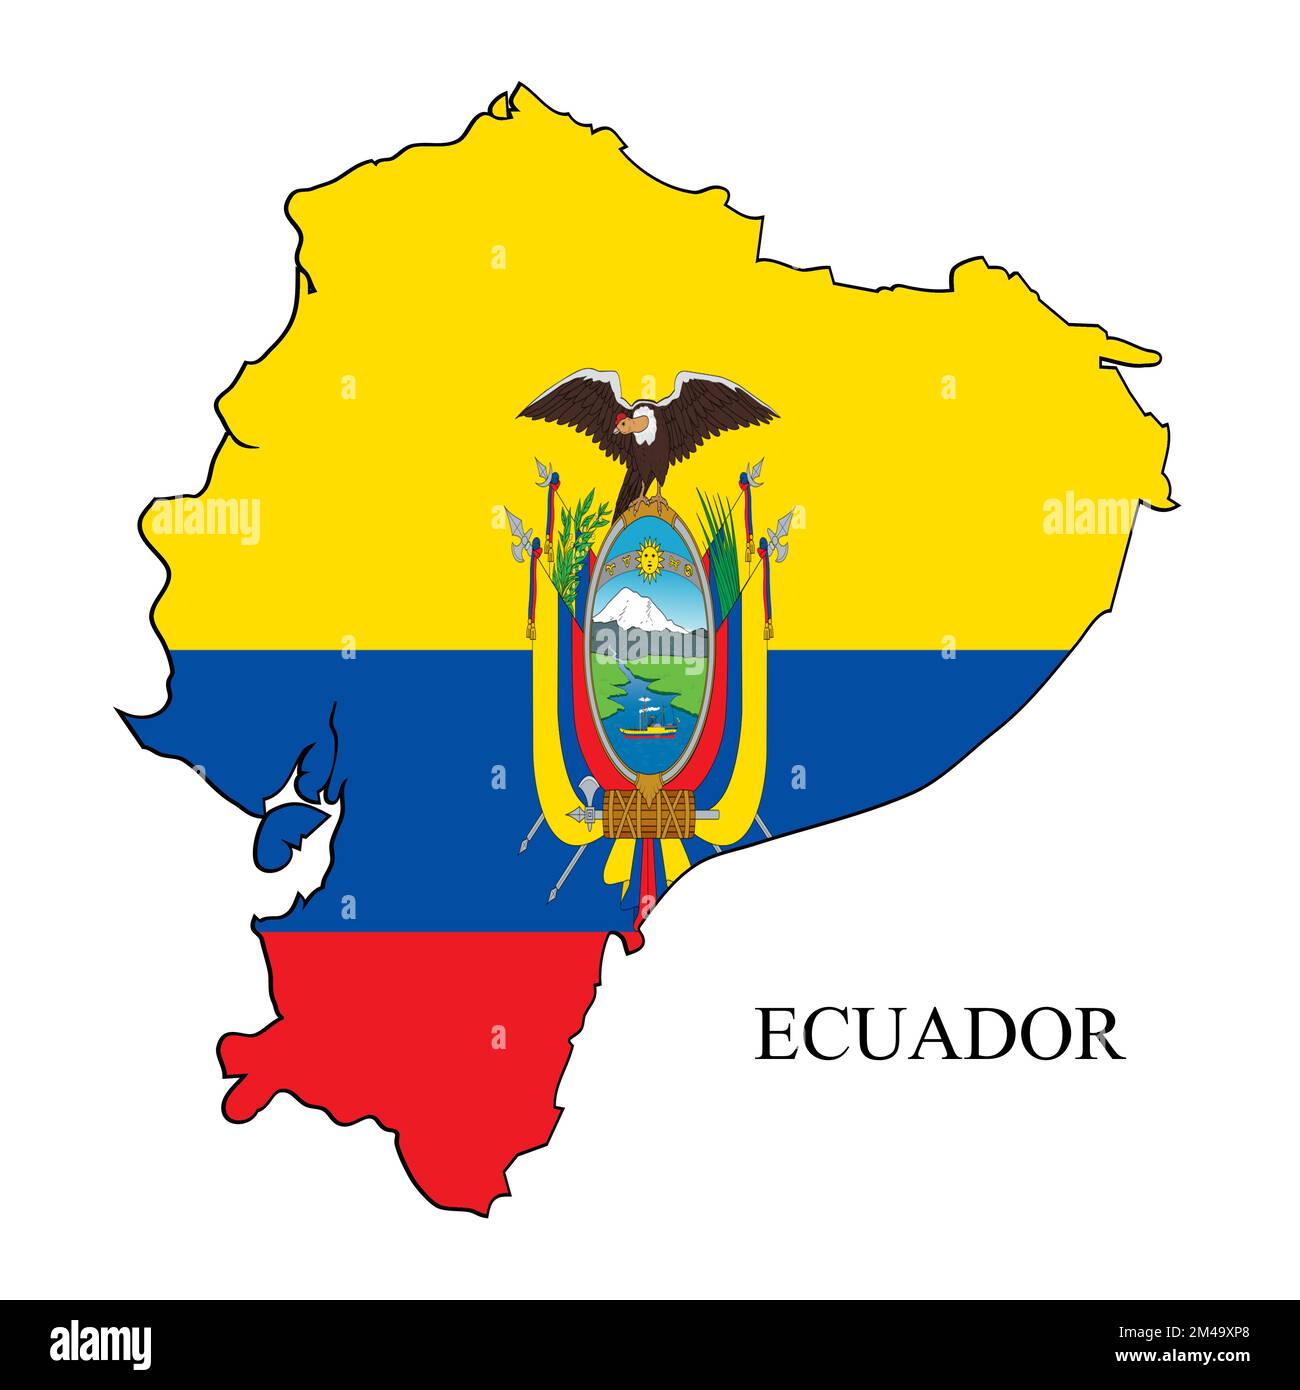 Ecuador map vector illustration. Global economy. Famous country. South America. Latin America. America. Stock Vector